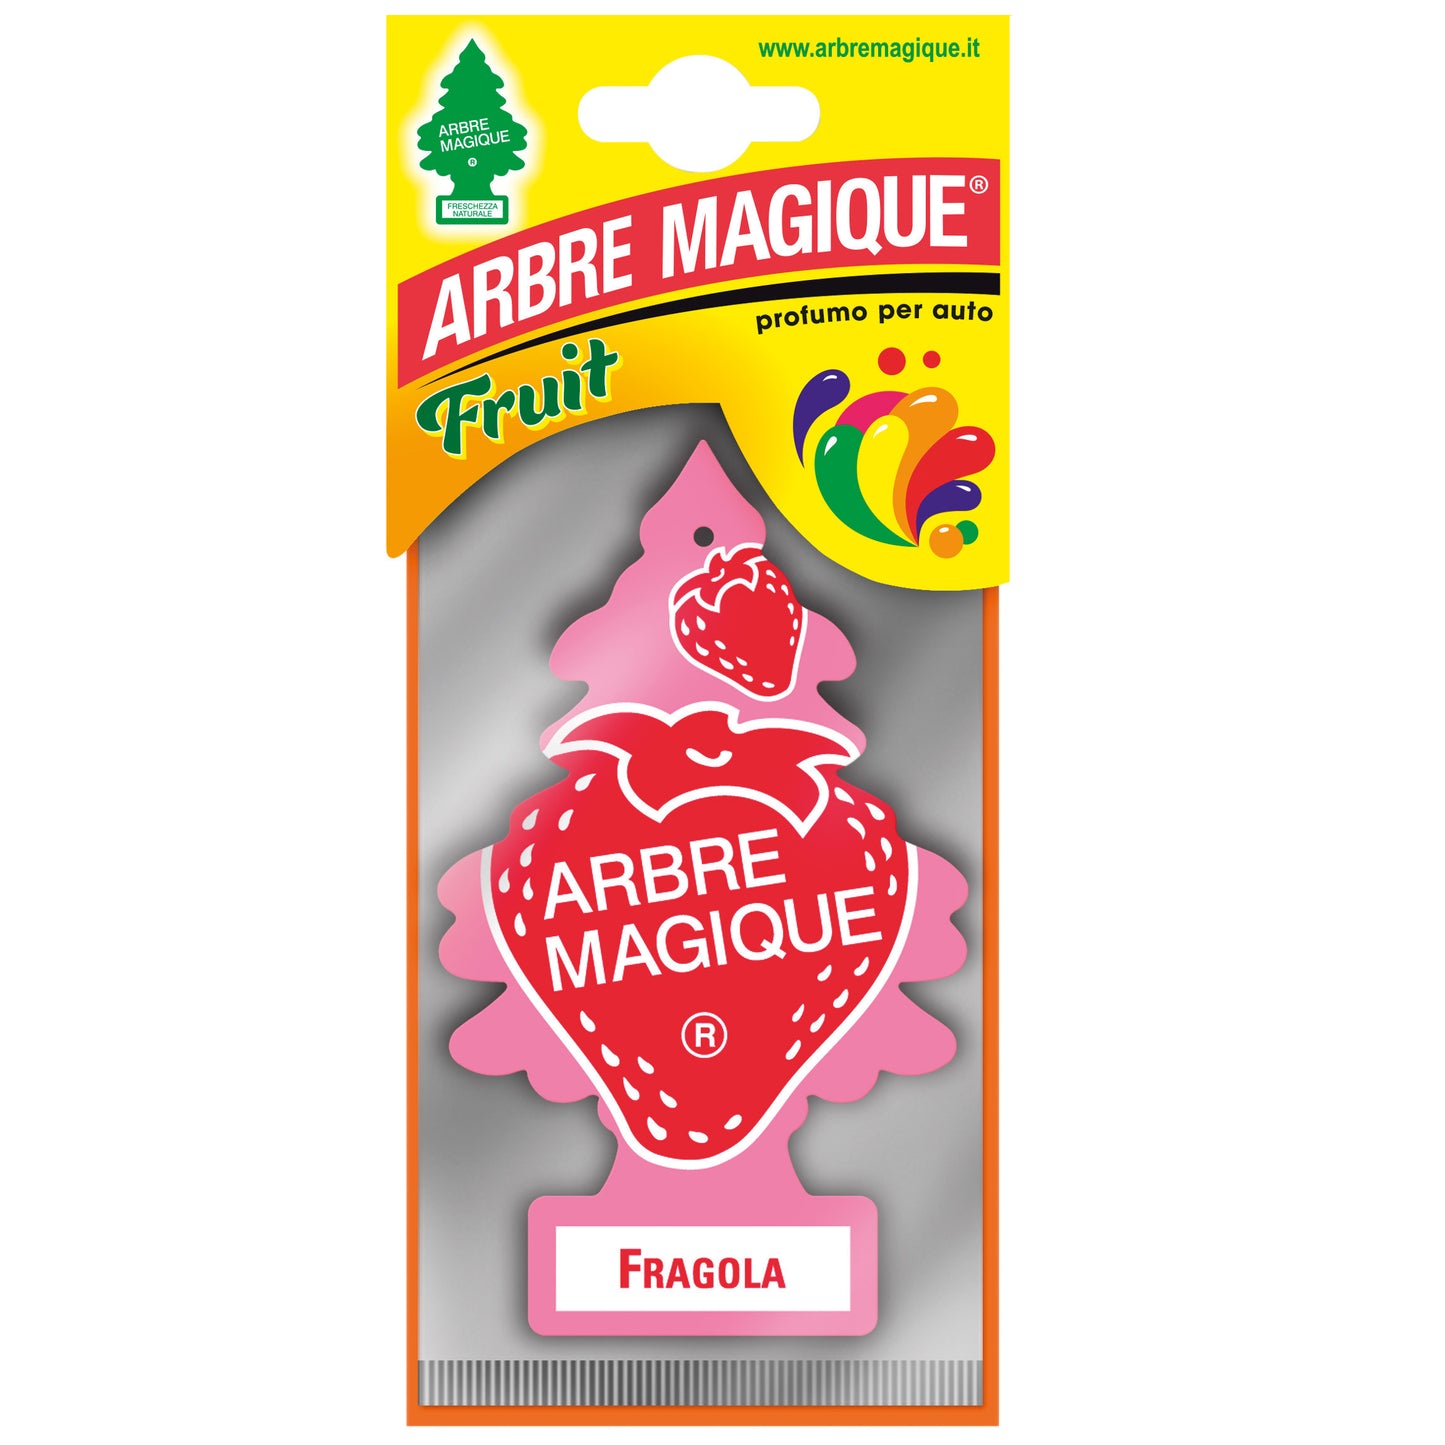 Arbre magique fruit fragola